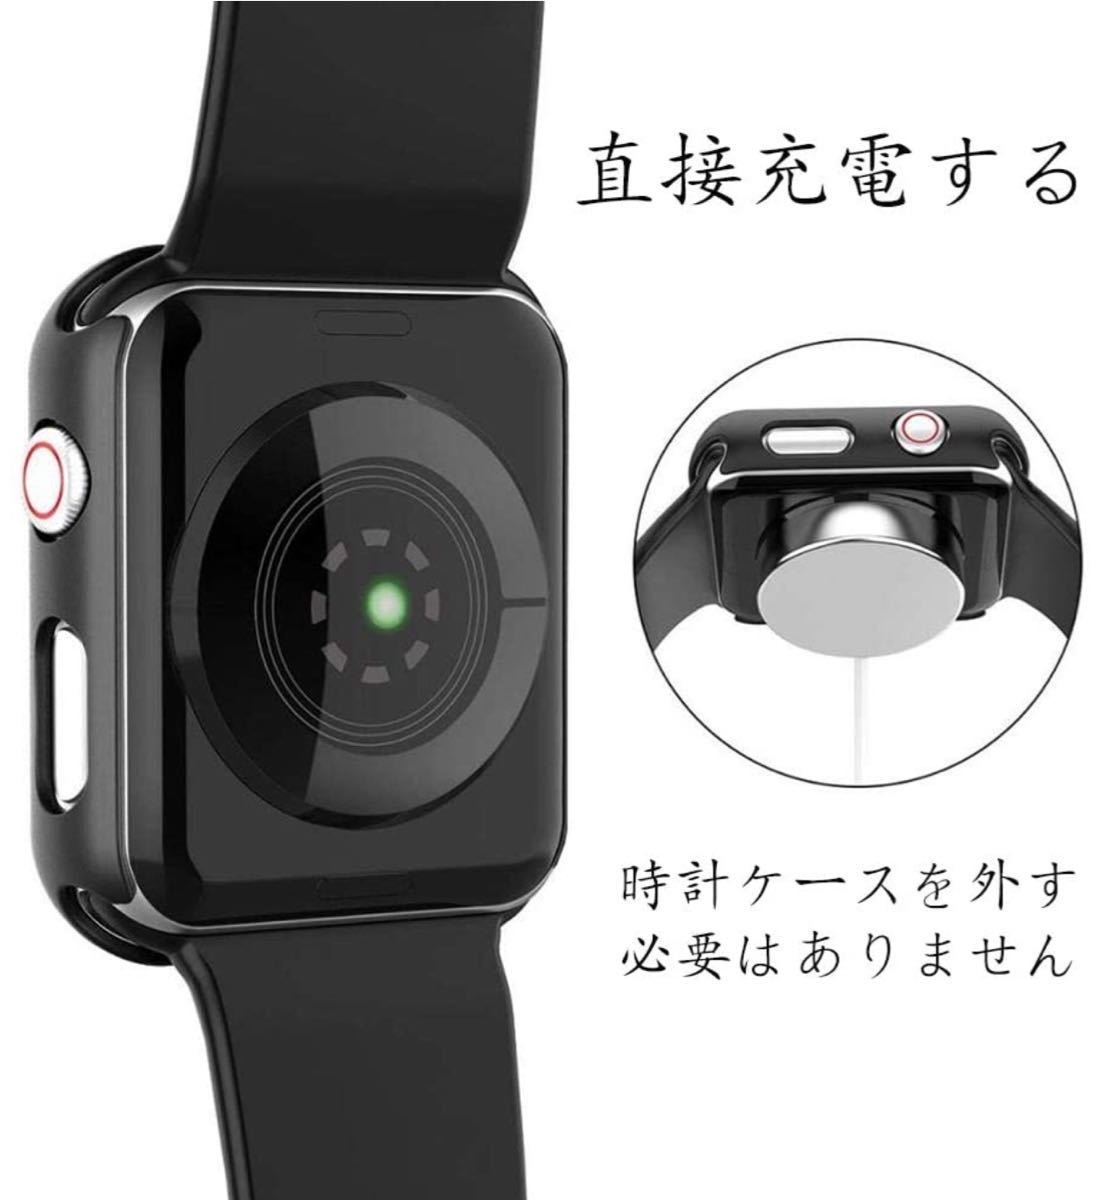  Apple Watch Series3/Series2 42mm ケース 